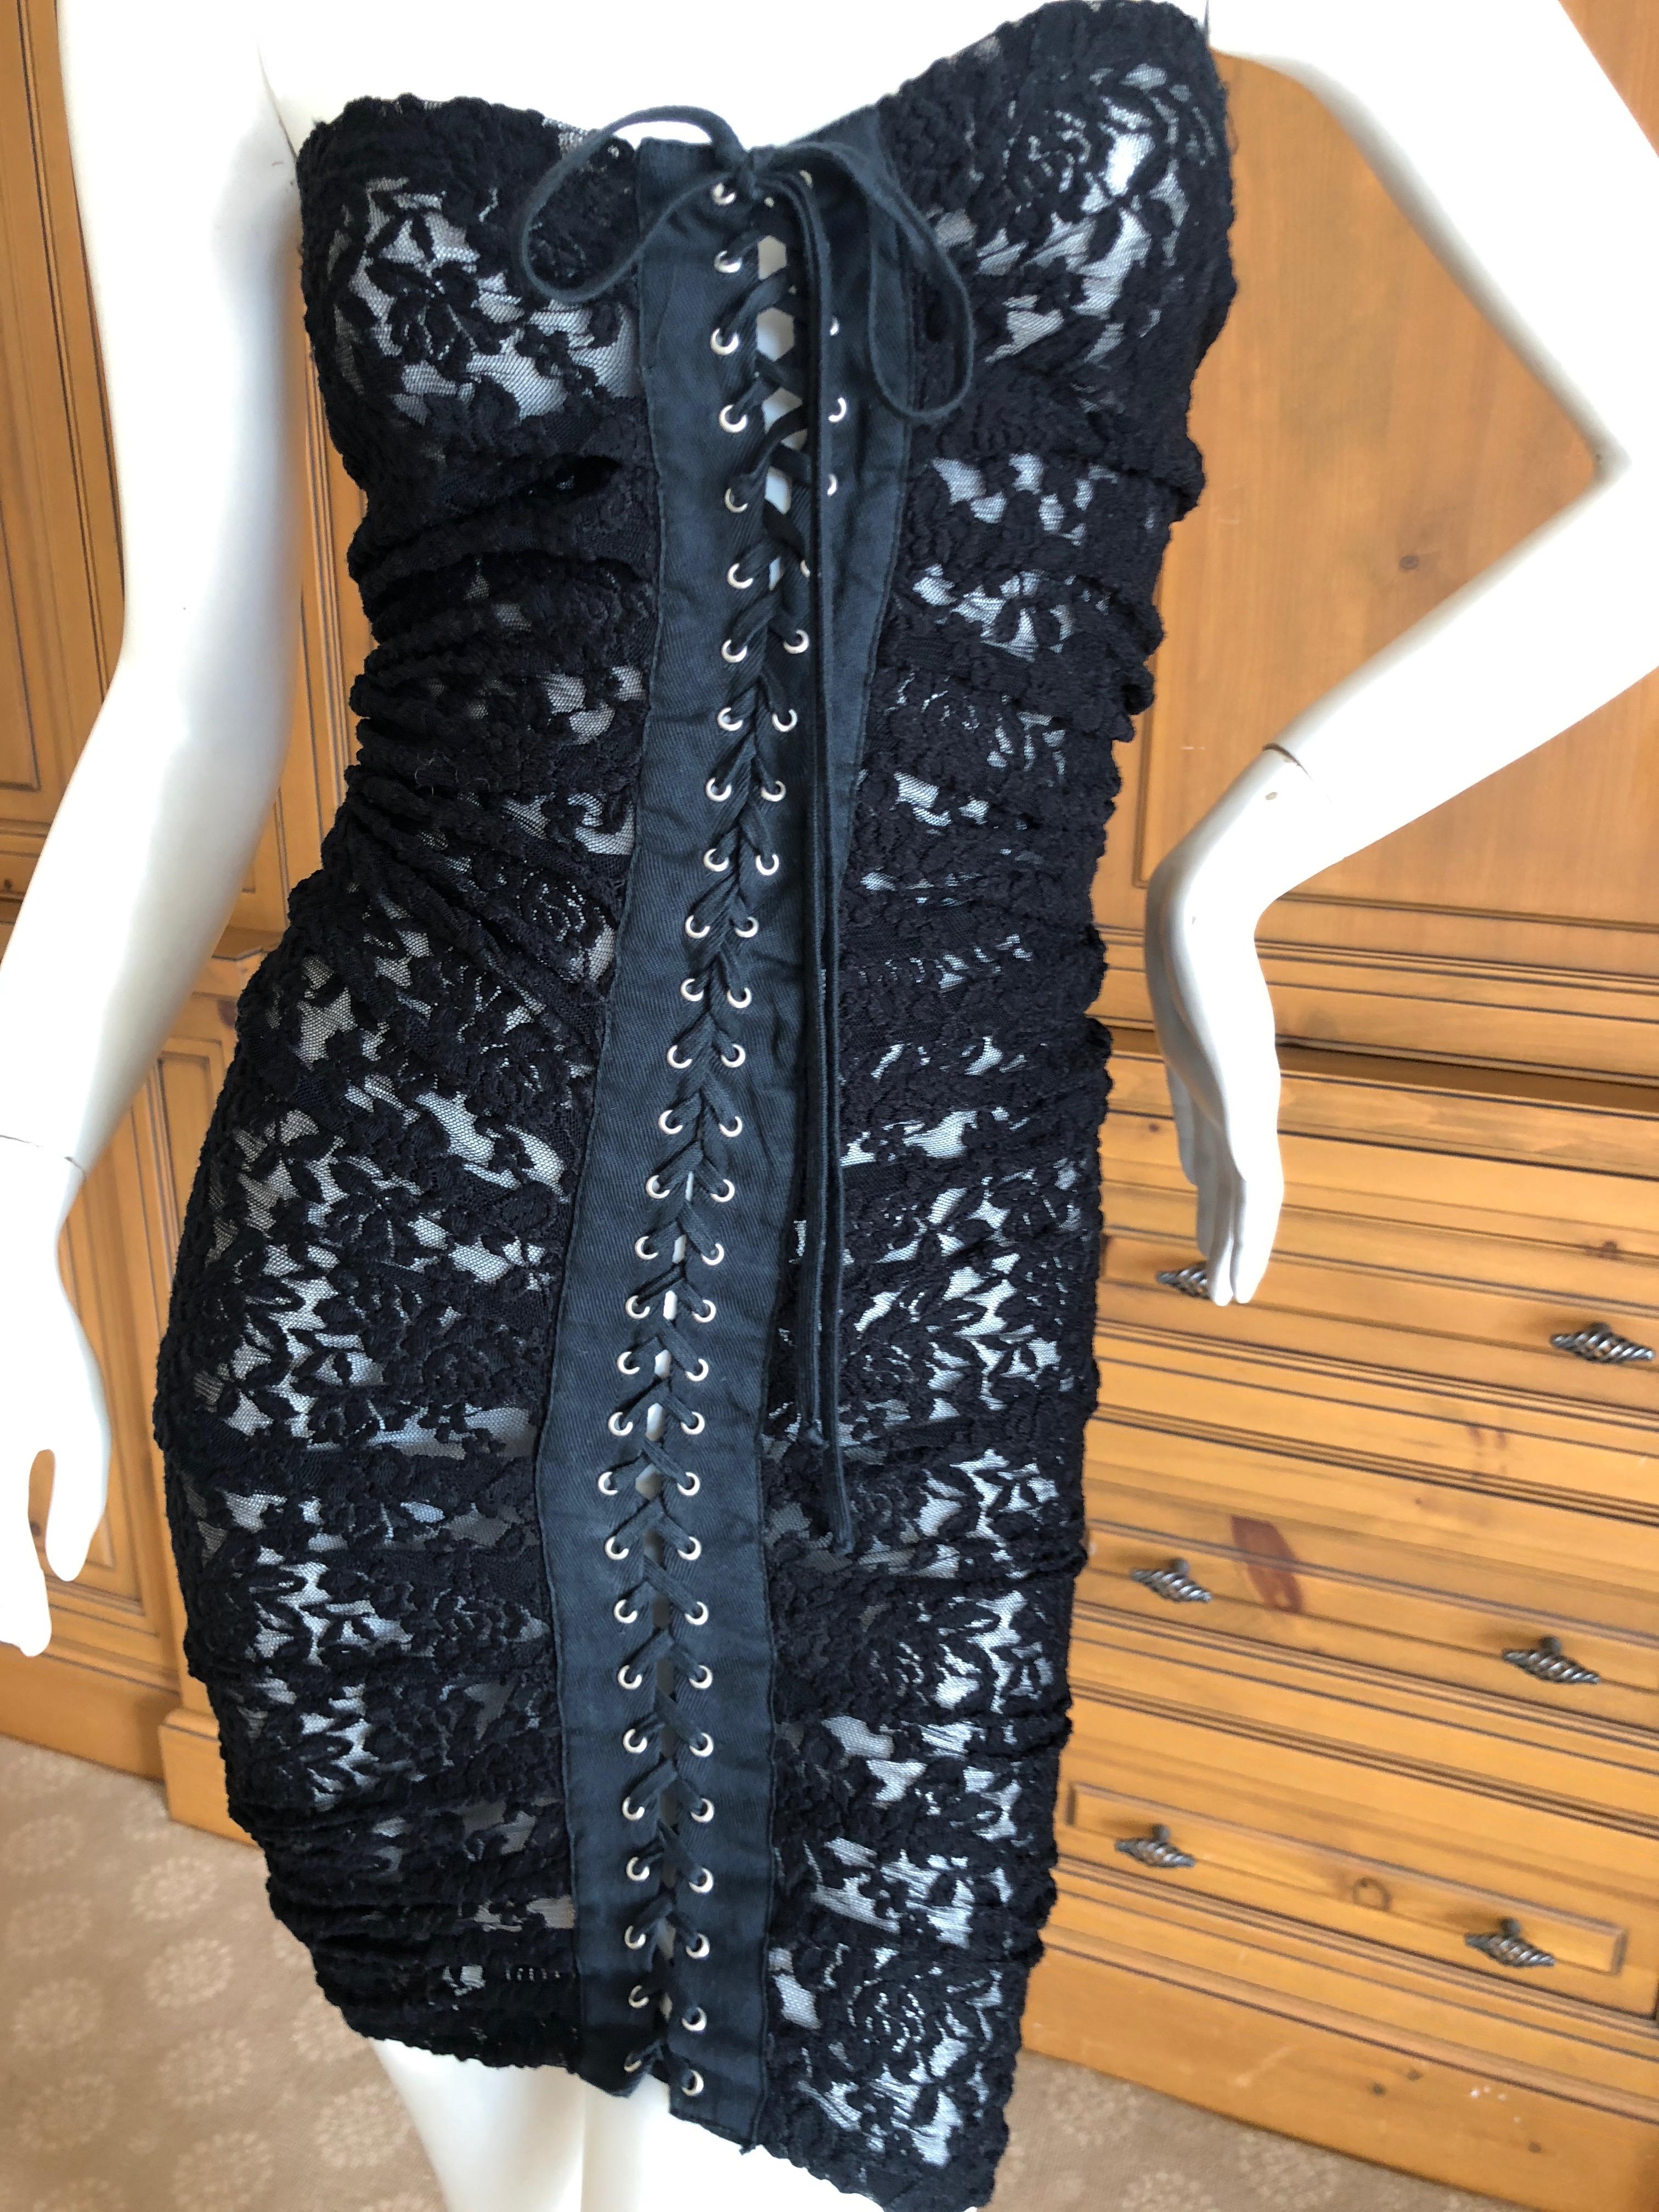 Women's D&G Dolce & Gabbana Sheer Black Lace Strapless Cocktail Dress w Lace Up Details